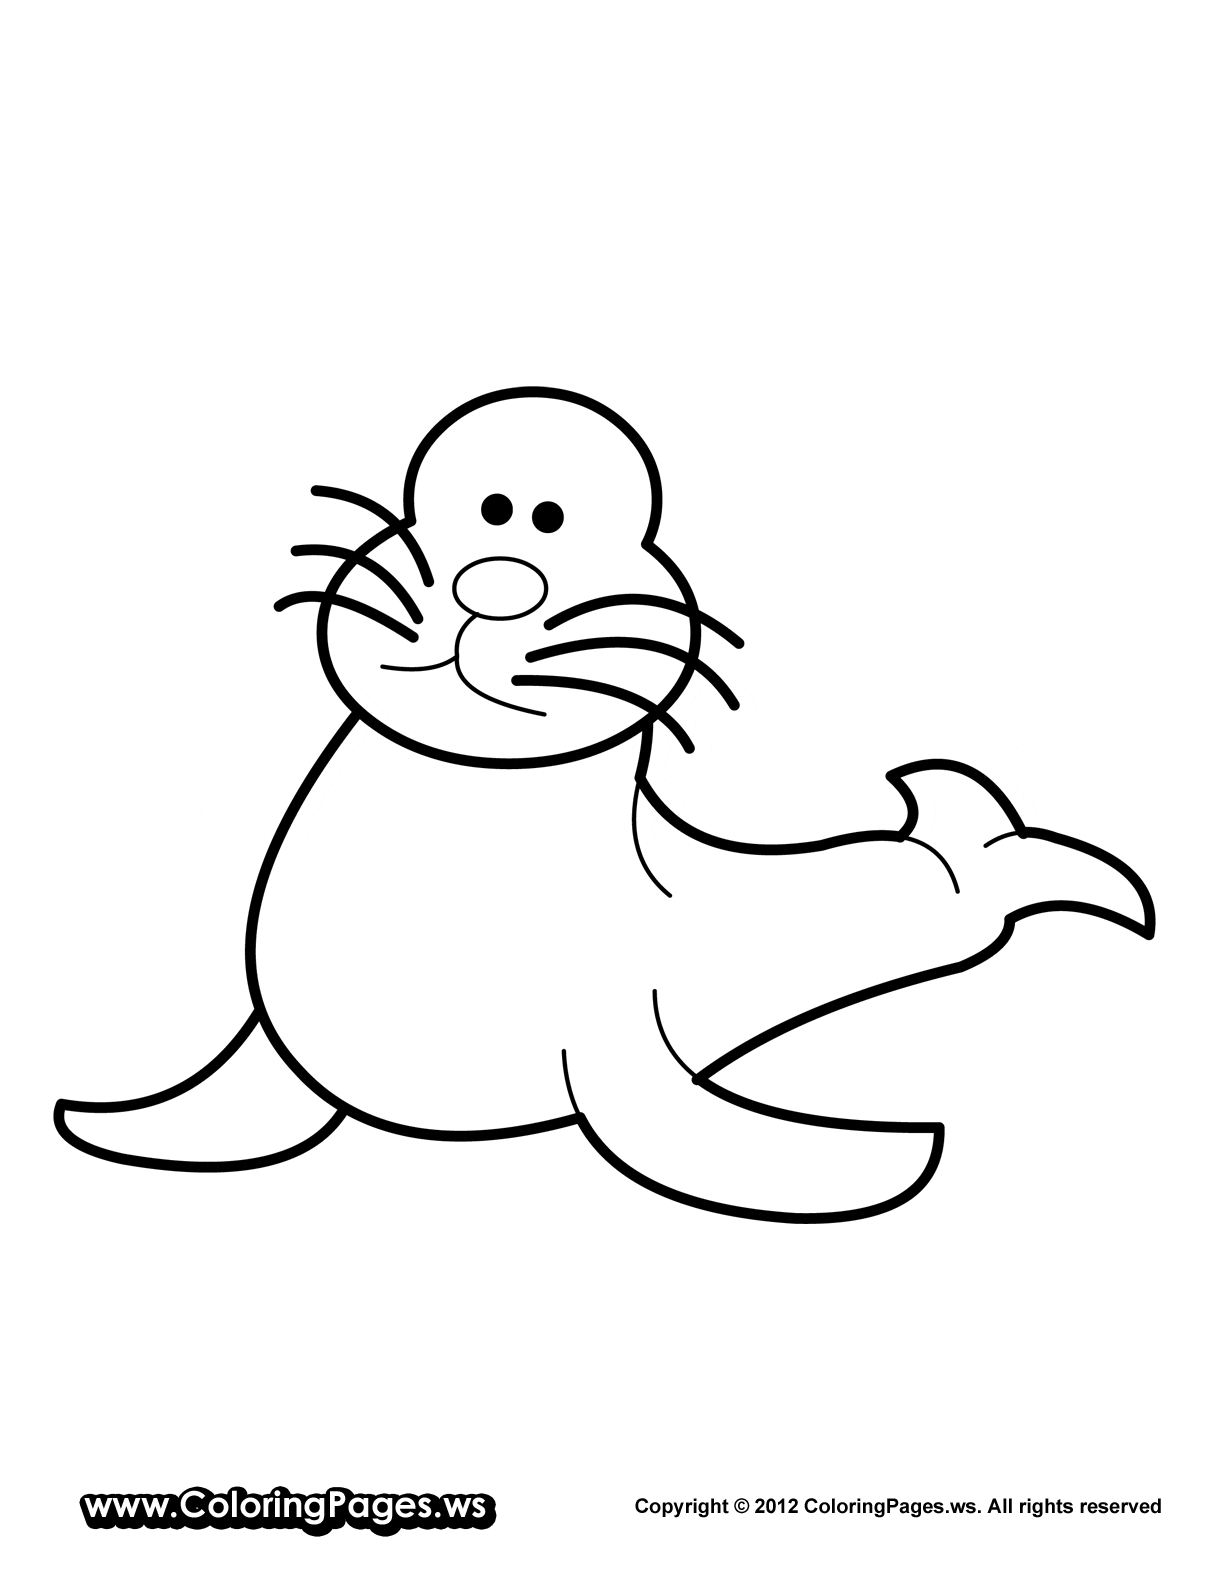 Seal Image For Children